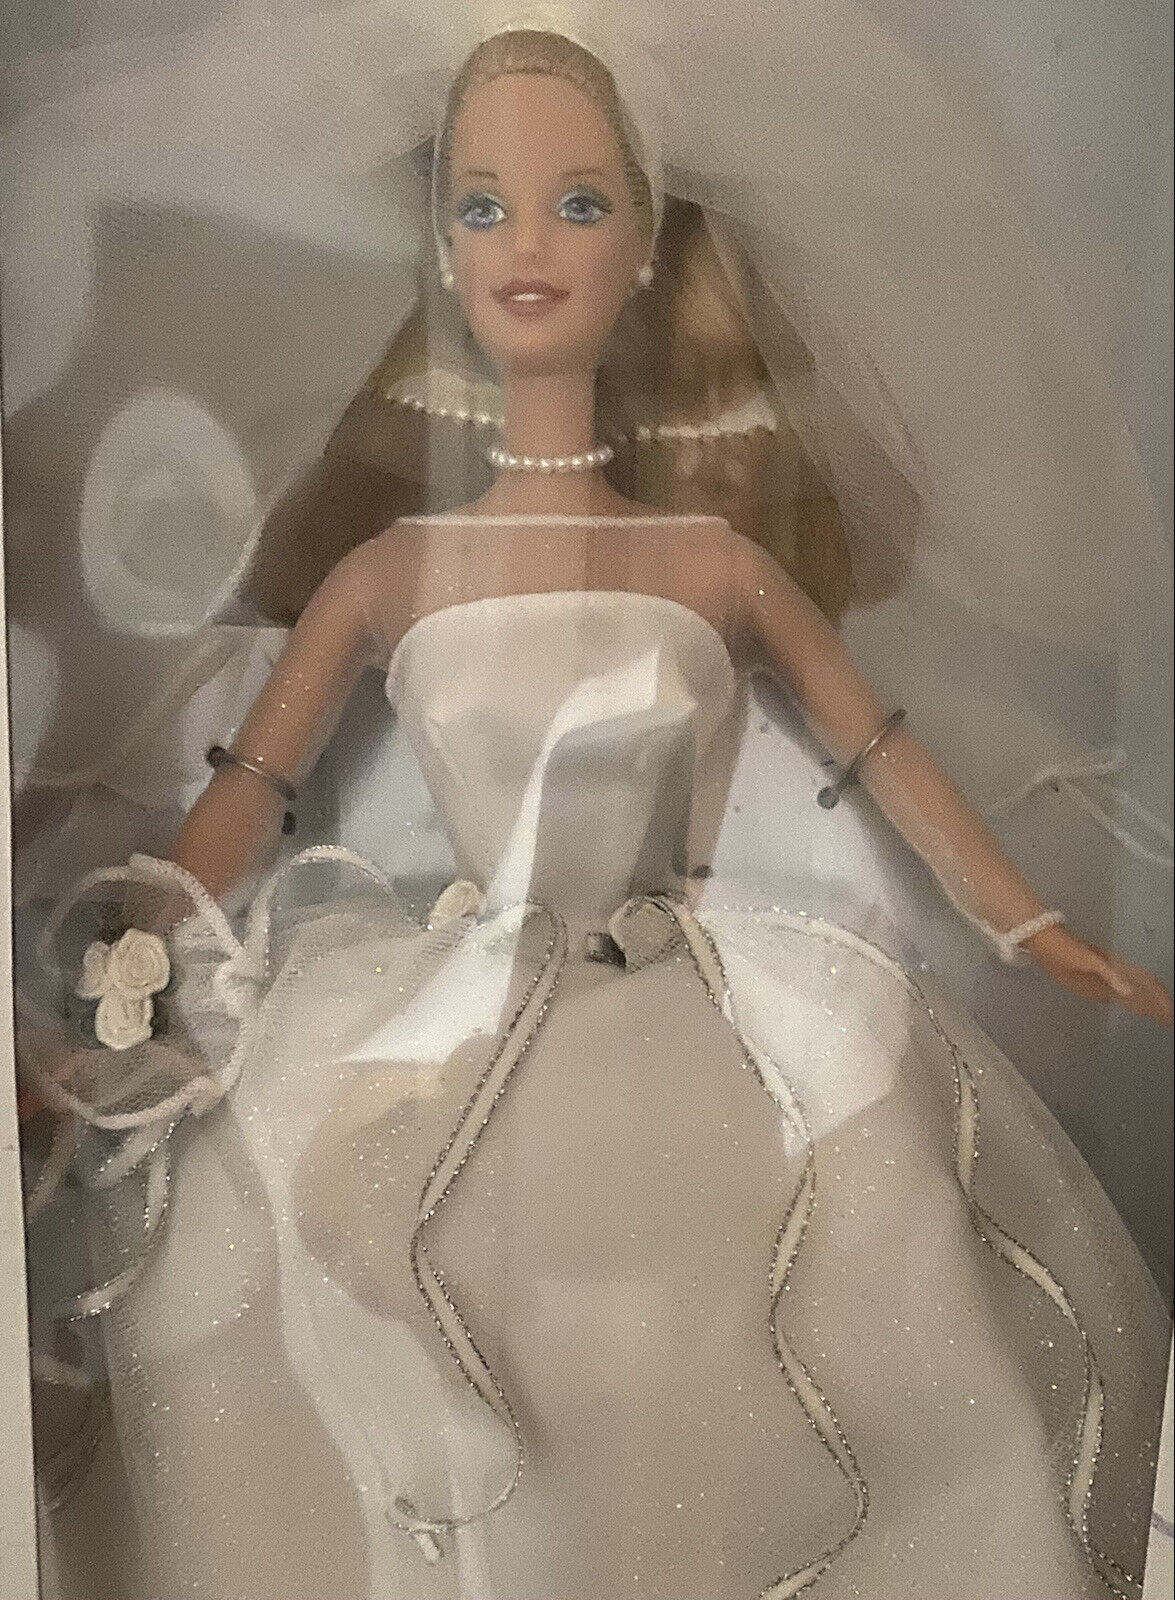 Blushing Bride Blonde Barbie Doll #26074 NRFB 1999 Original Edit